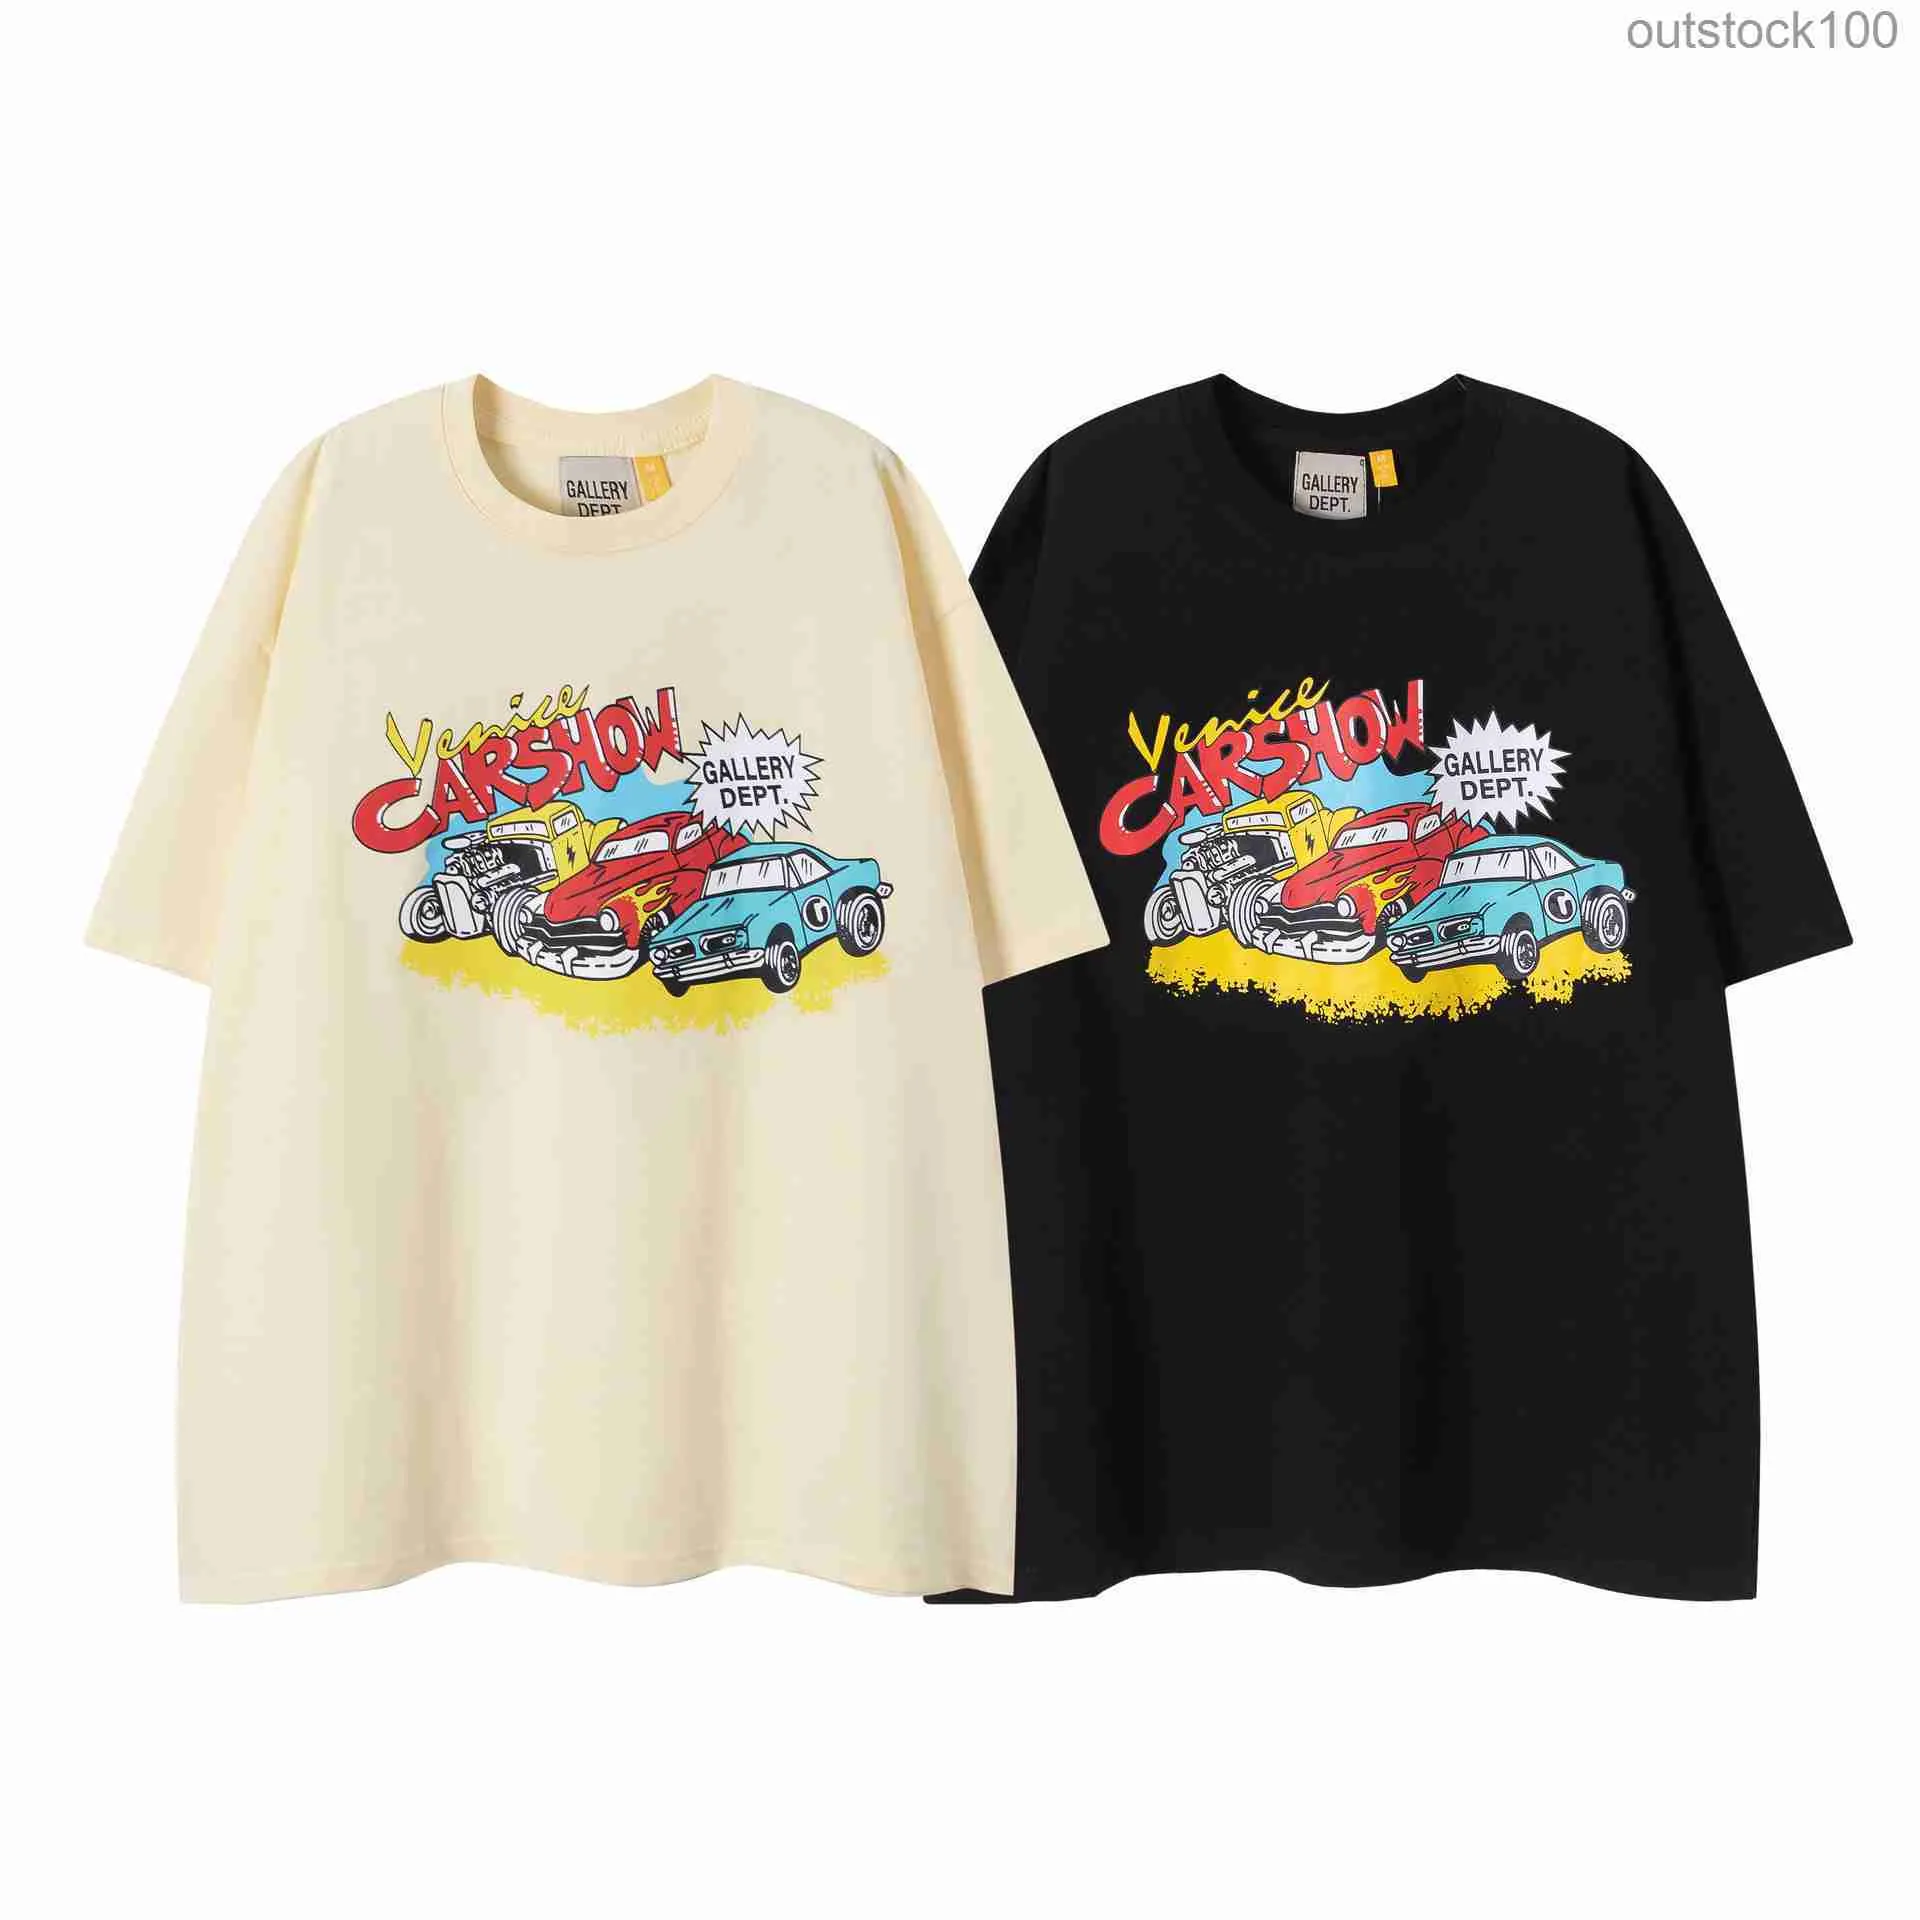 TRENDE LUXURIE Galery DAPT Brand Original T-shirts Summer NOUVEAU CARTOONE CARTON CARTON LETTRE IMPRESSION COUPLE SUMBRE AVEC LOGO VRAI